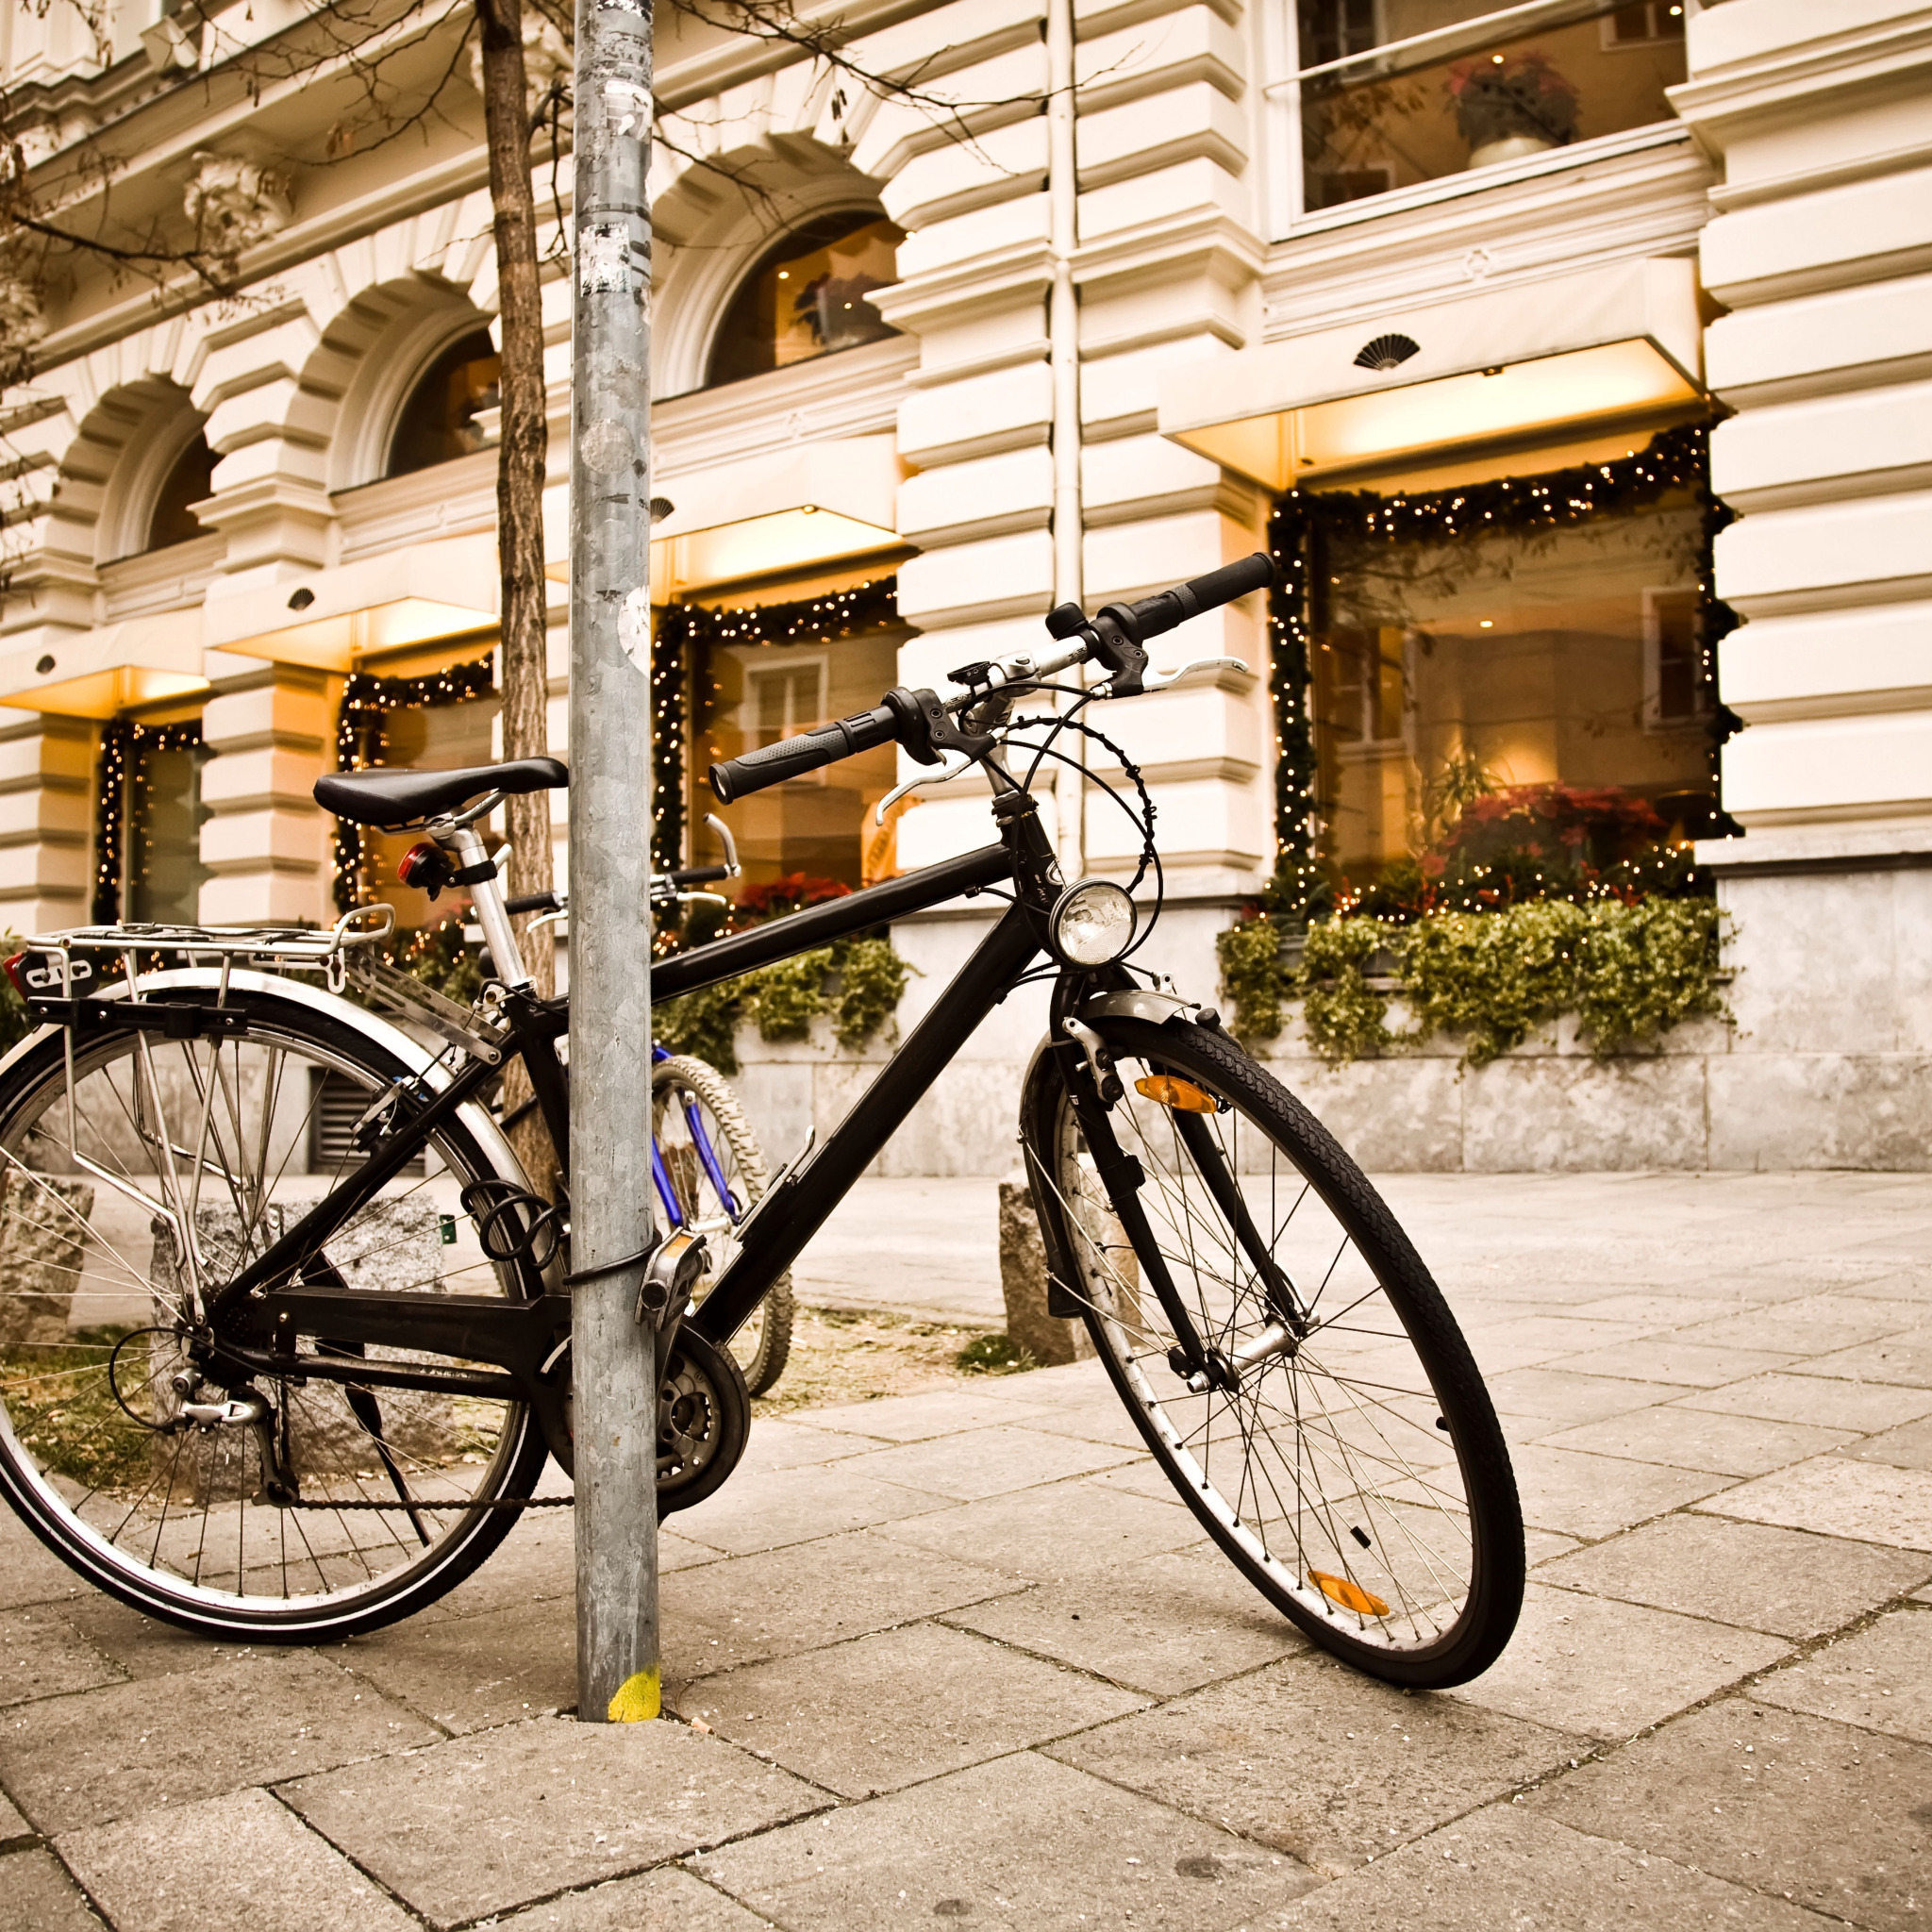 Www bike. Красивые велосипеды. Городской велосипед. Велосипед на улице. Красивый городской велосипед.